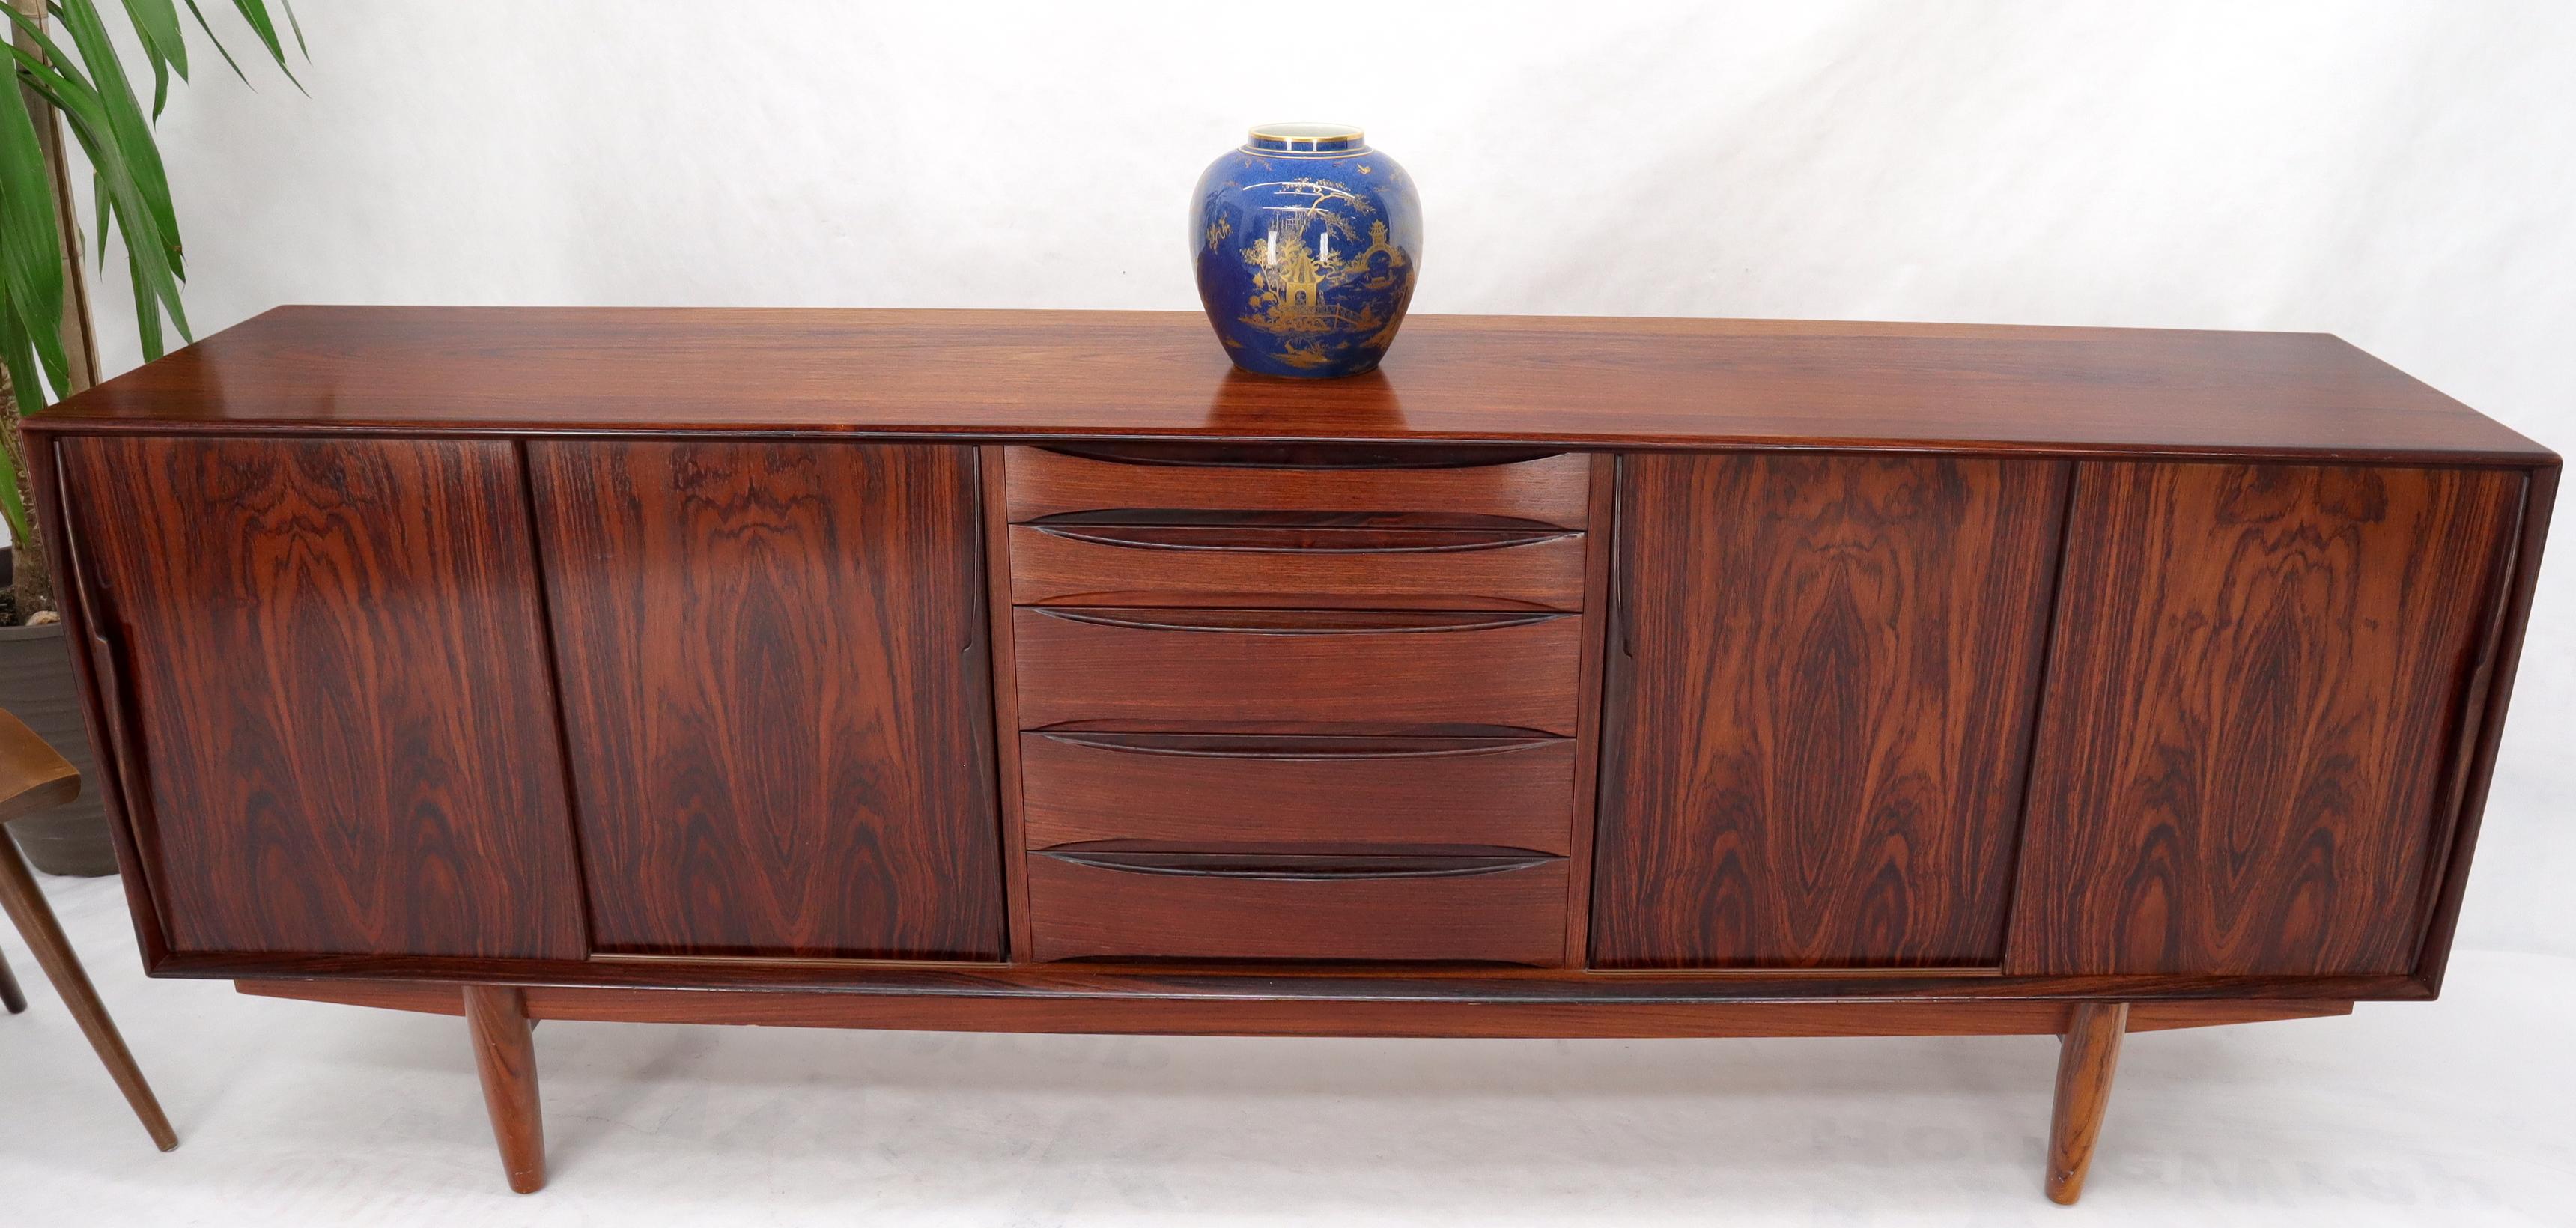 Danish Mid-Century Modern long rosewood credenza dresser cabinet.